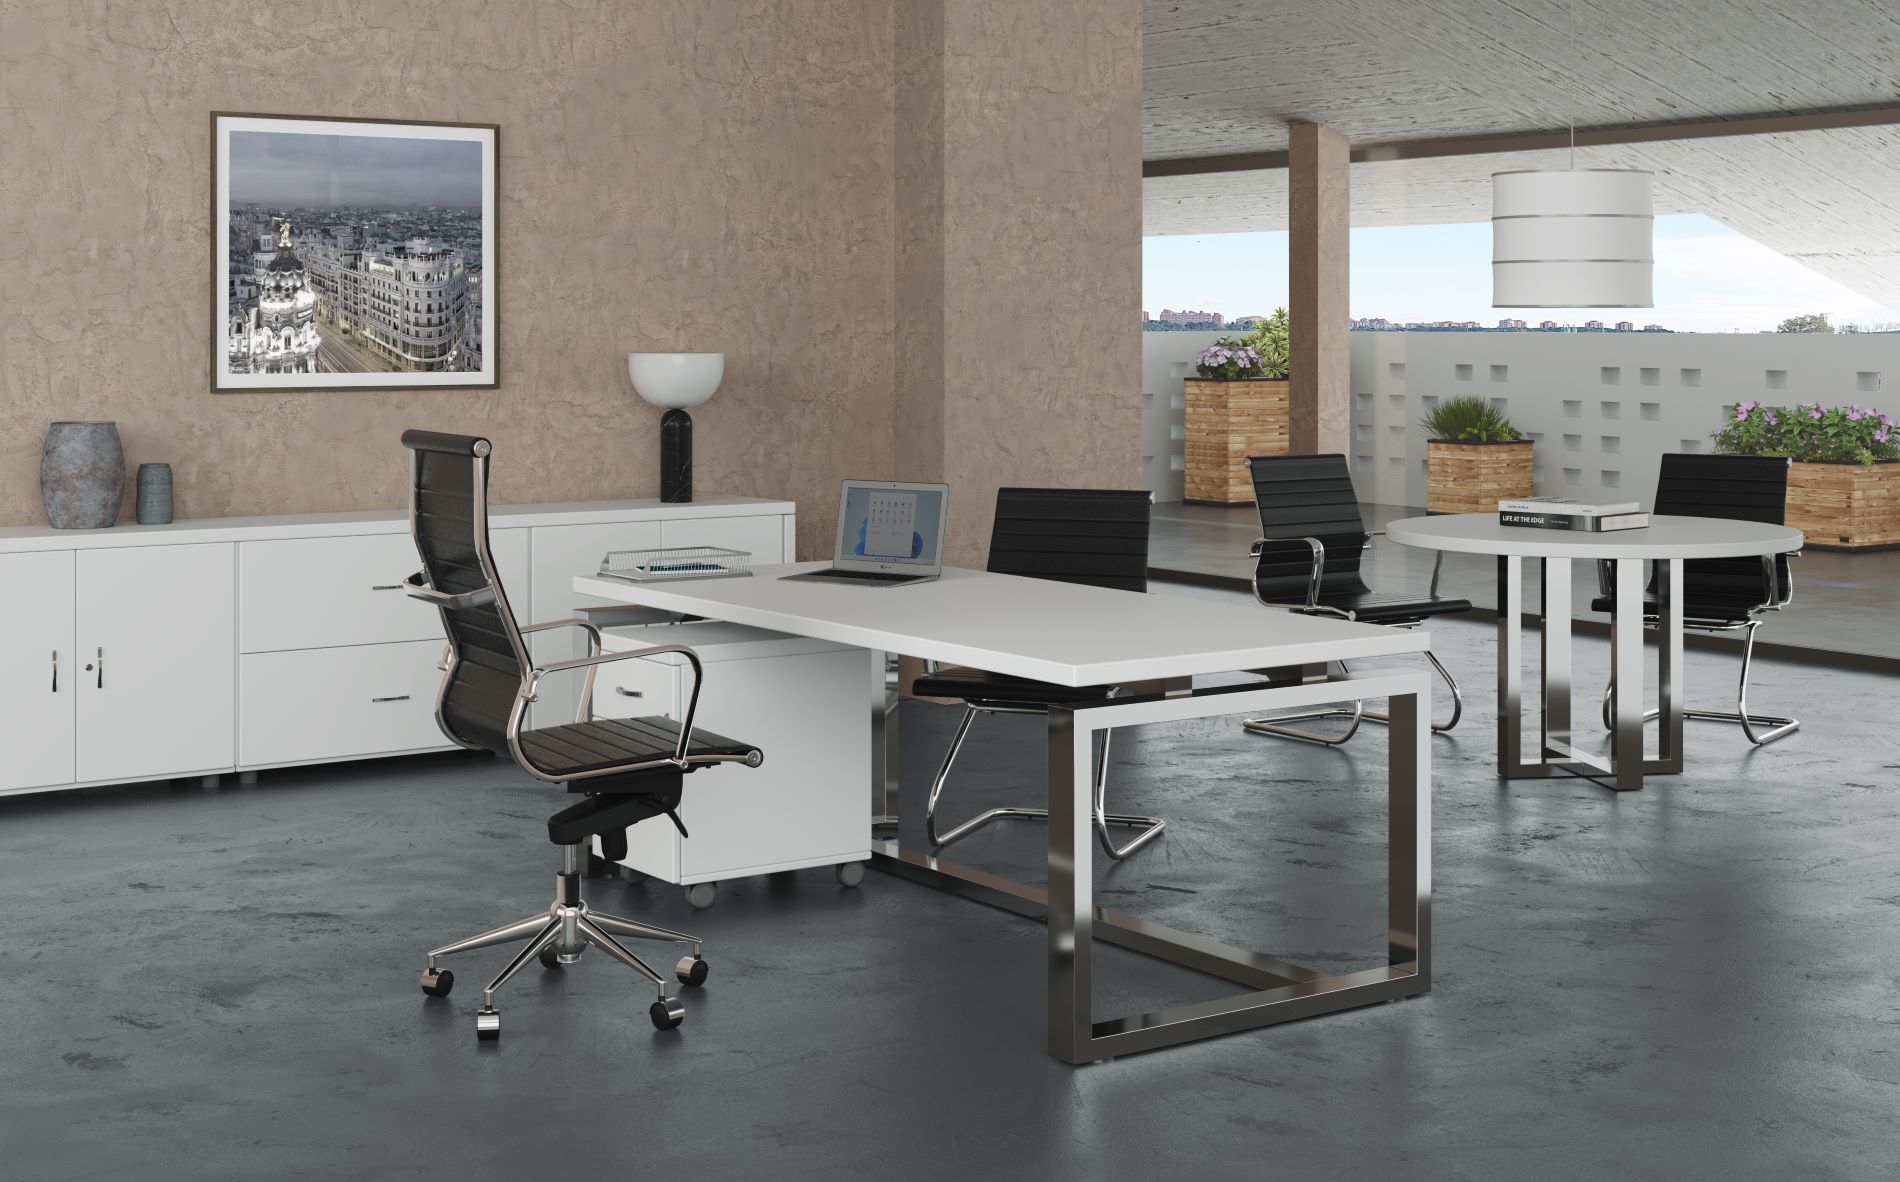 Oficina minimalista con silla de oficina giratoria con acabado simil piel